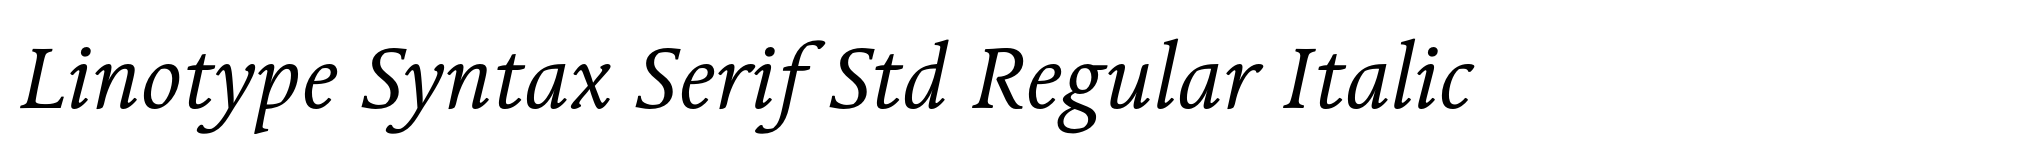 Linotype Syntax Serif Std Regular Italic image